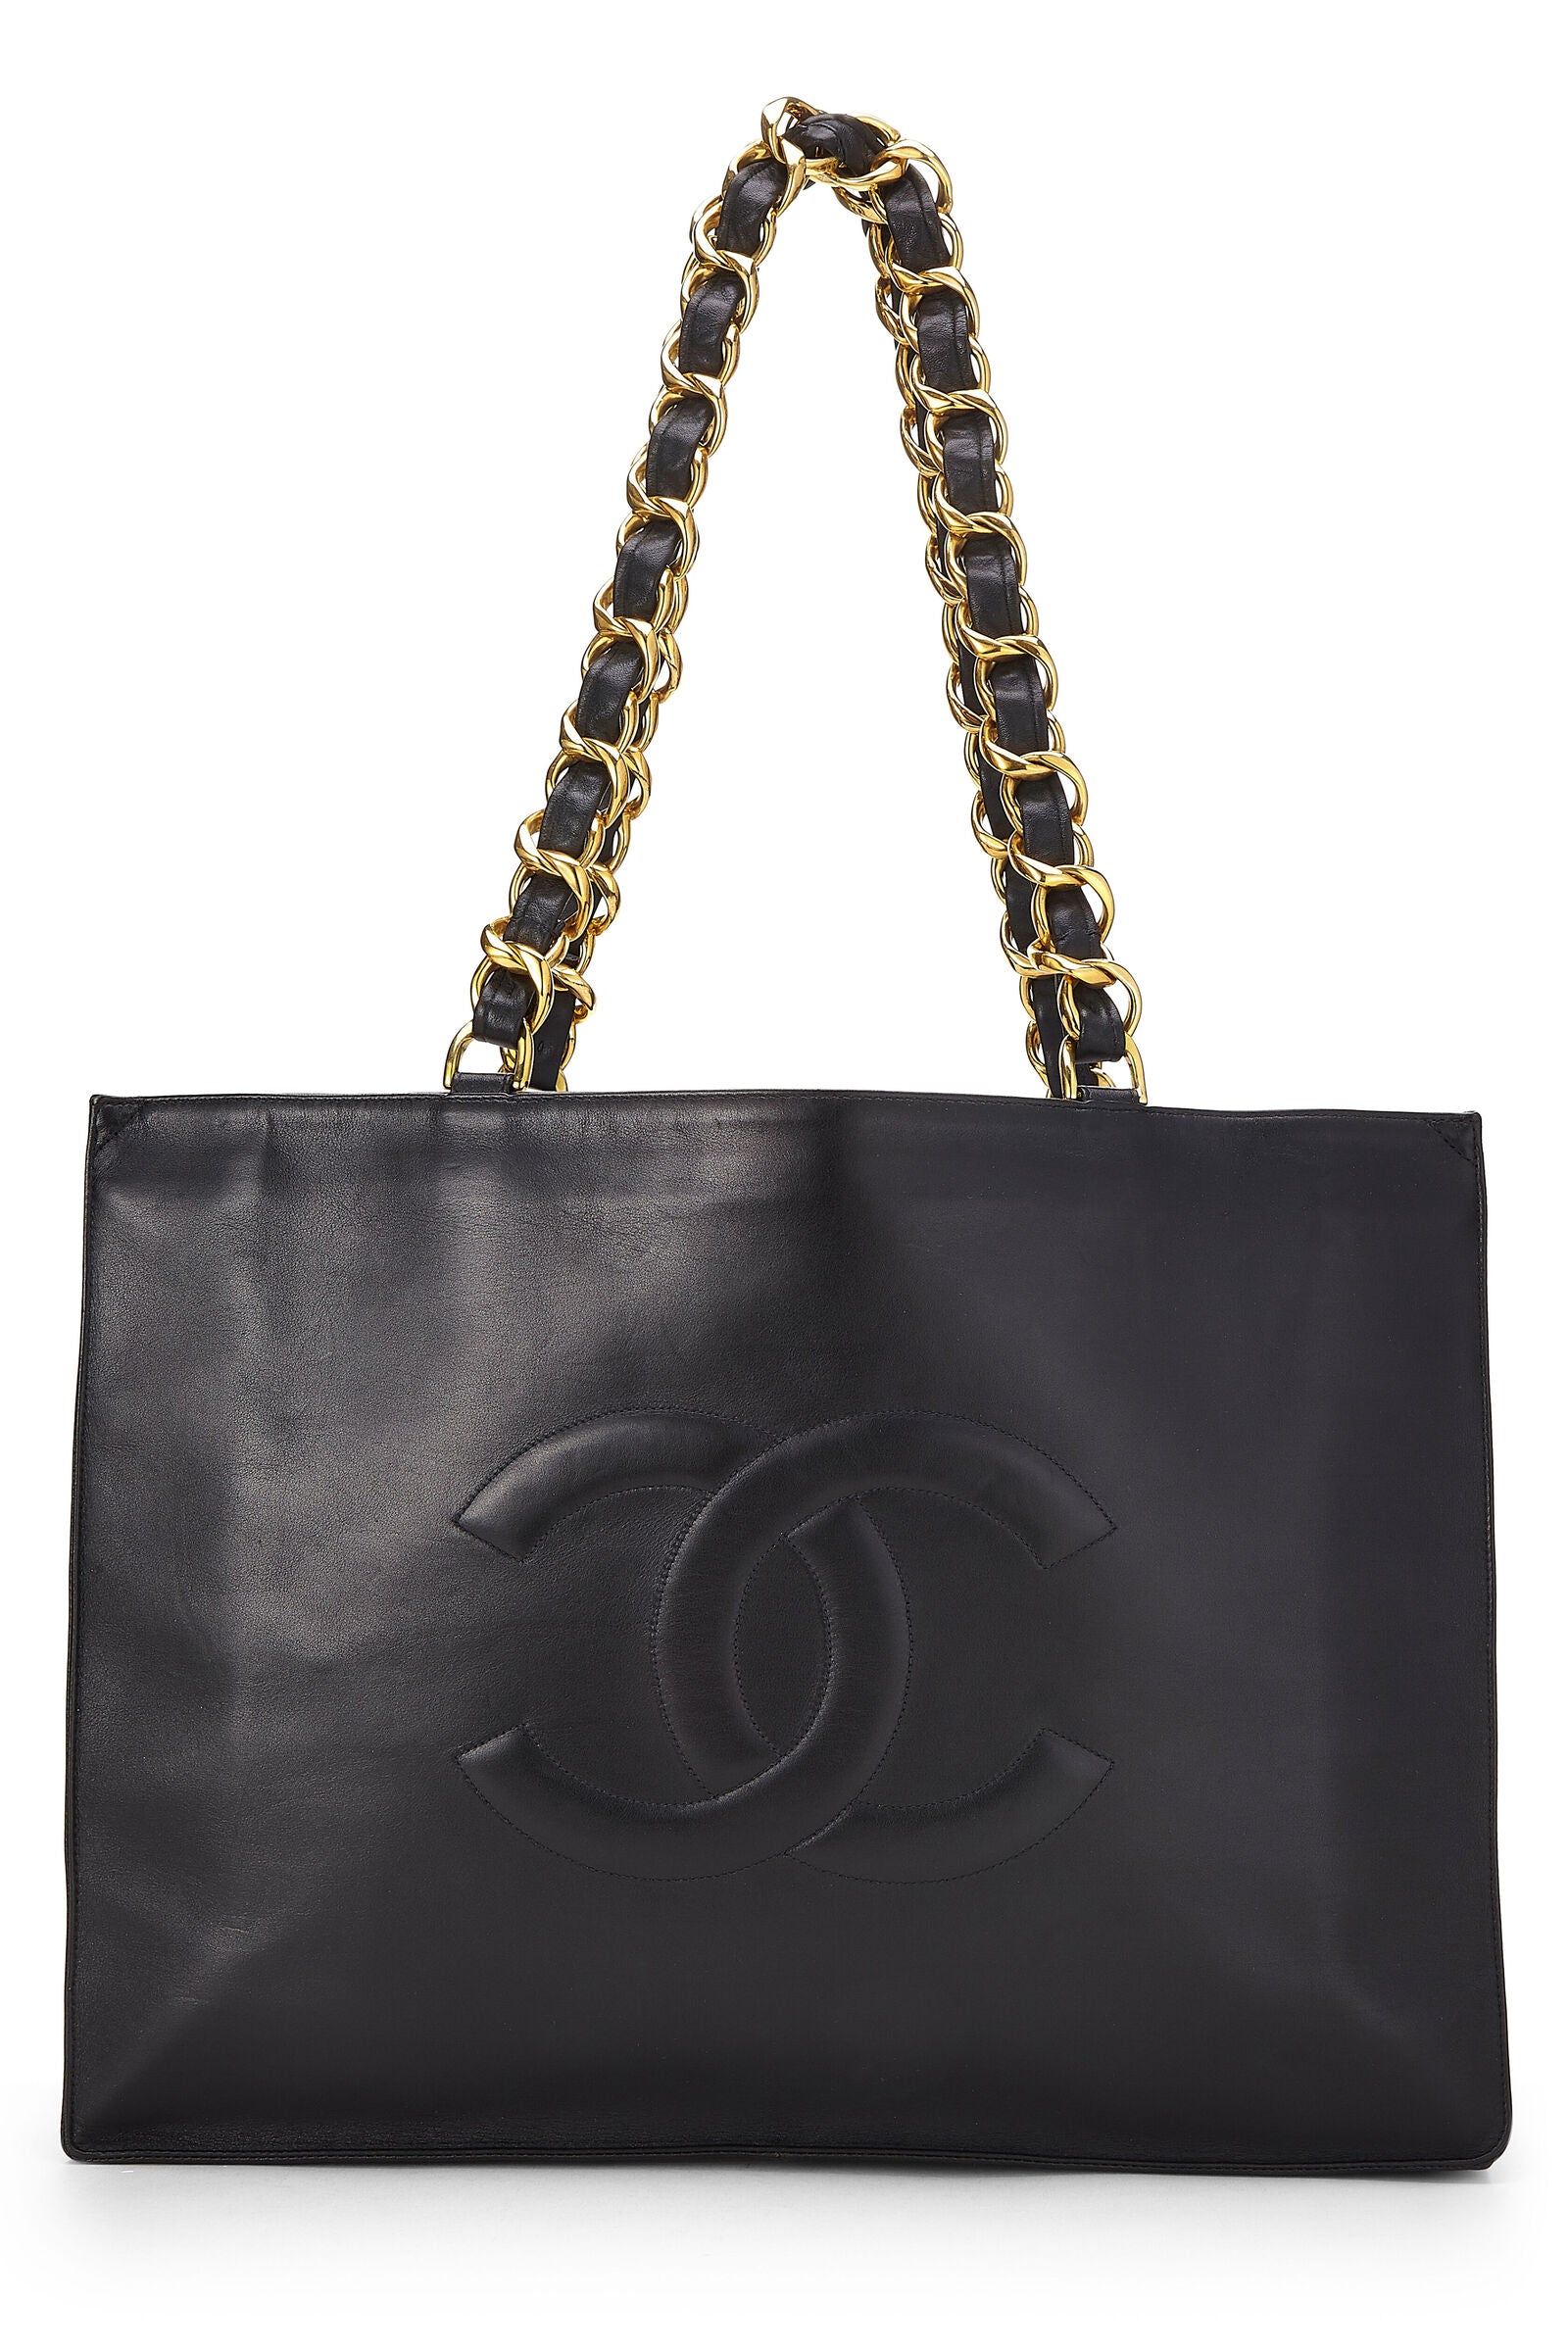 Chanel Black Vintage Lambskin Shopping Bag Tote 24K GHW